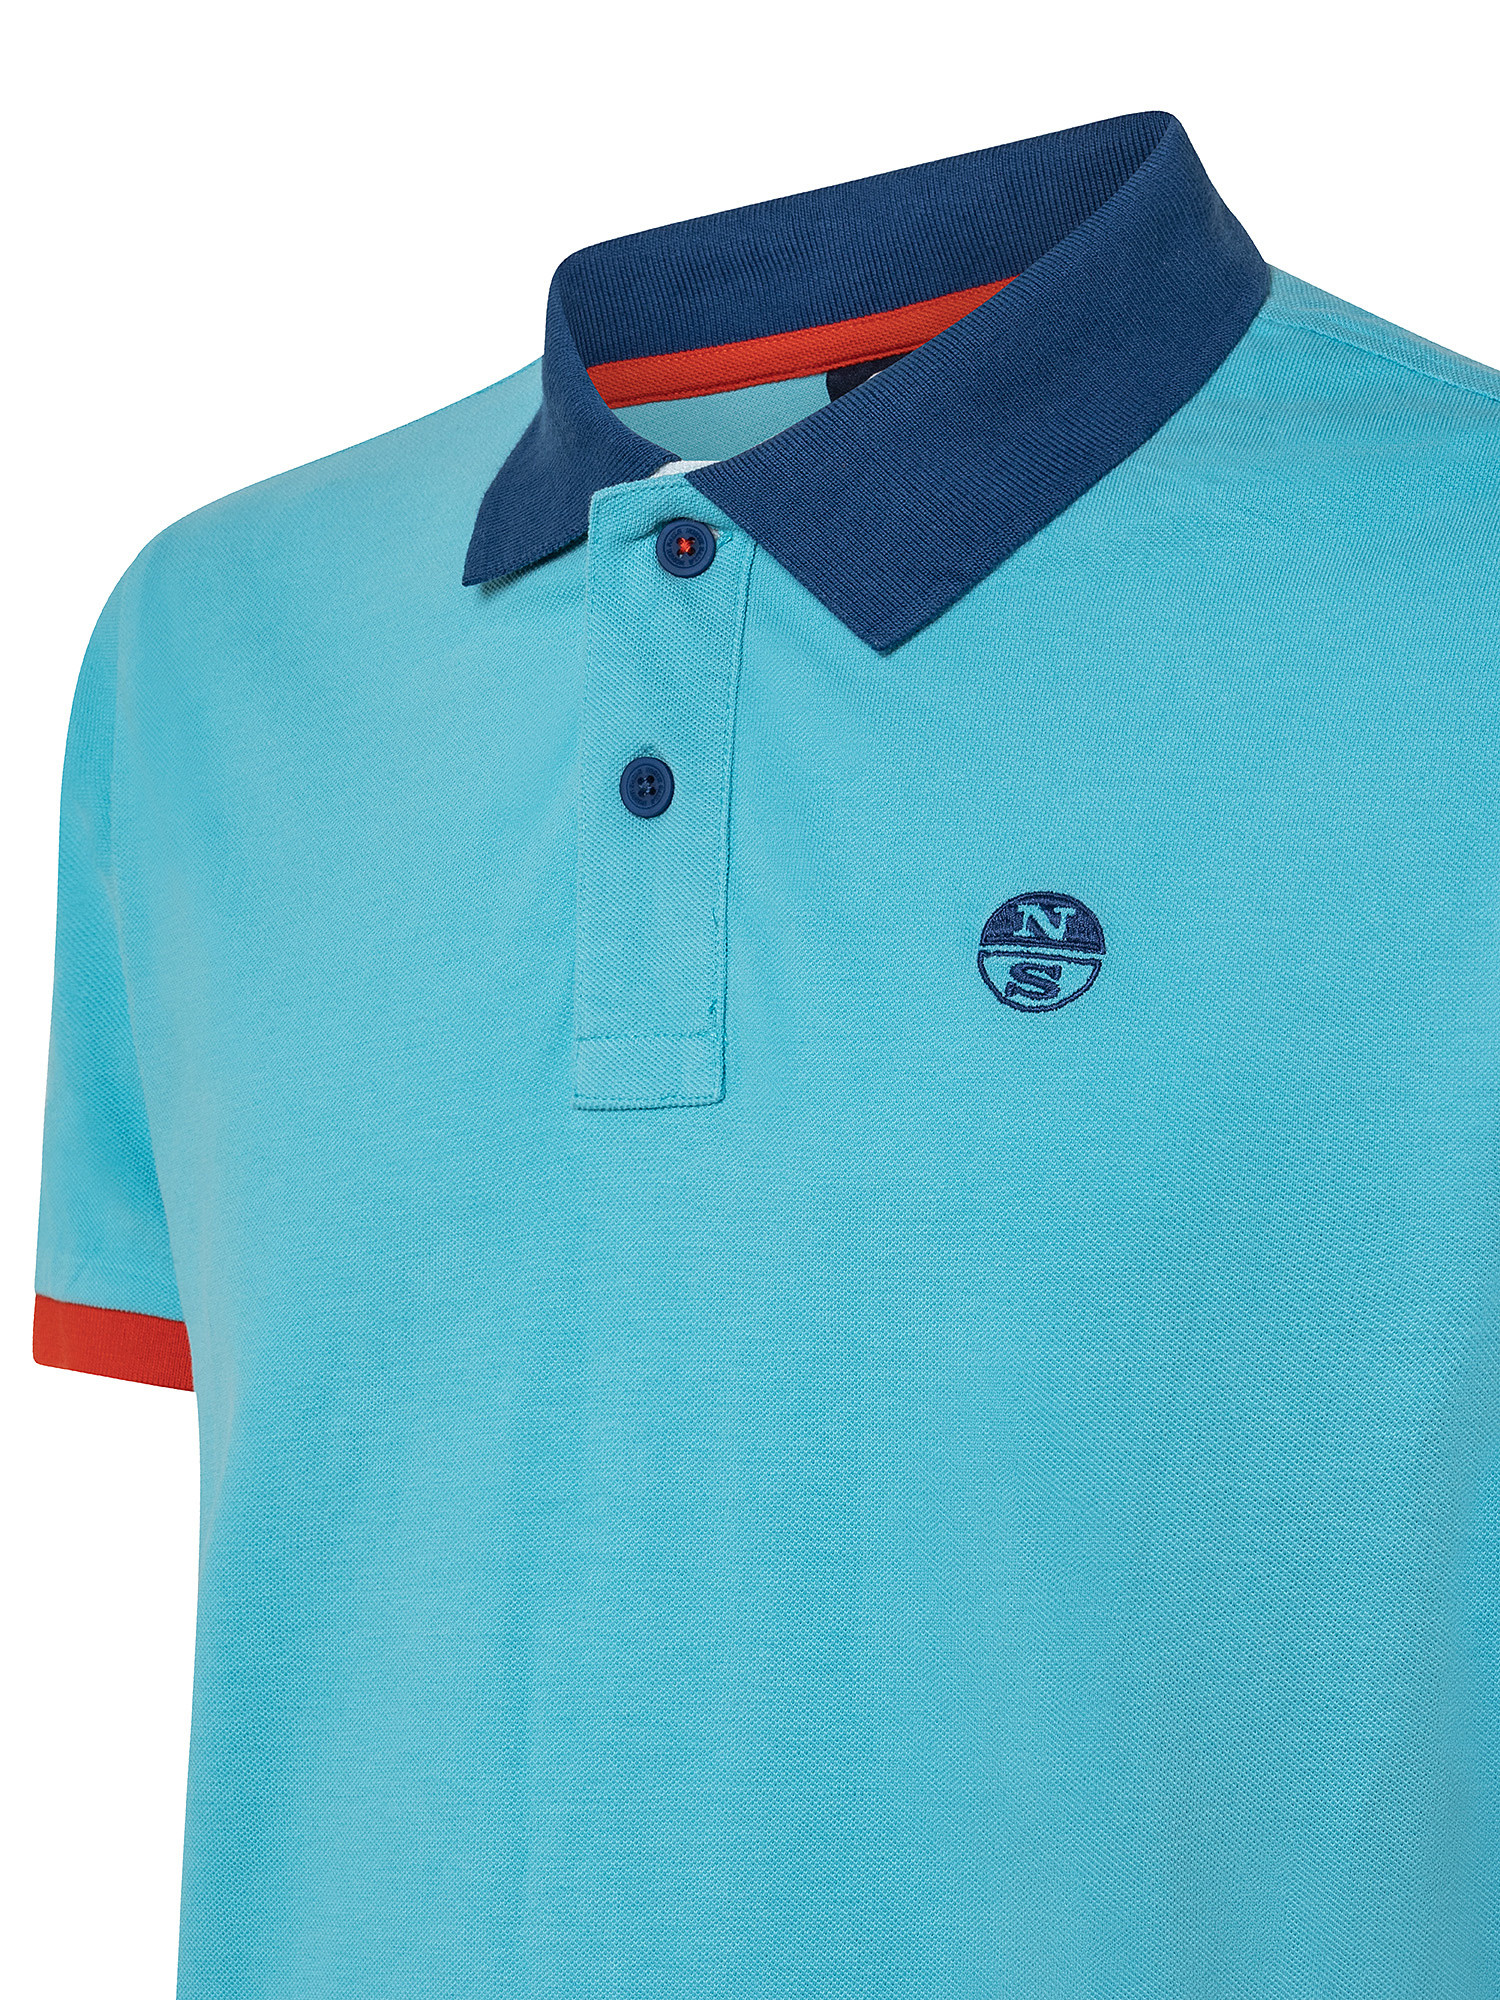 Polo manica corta con logo, Blu, large image number 2